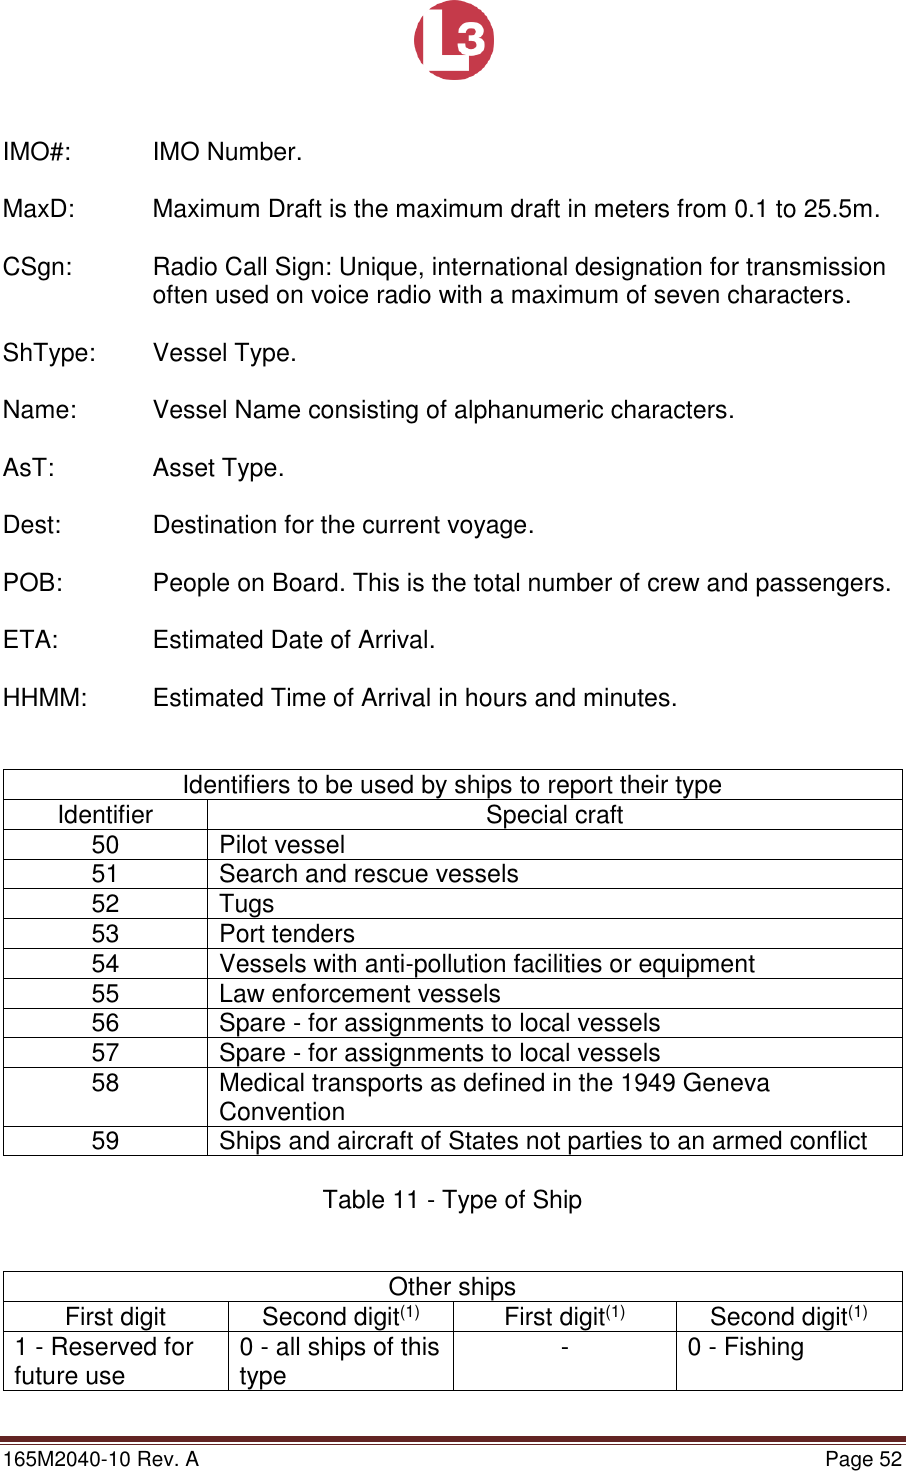 Page 52 of L3 Technologies AISA6 Shipboard Mobile AIS User Manual Memory Verification Procedure